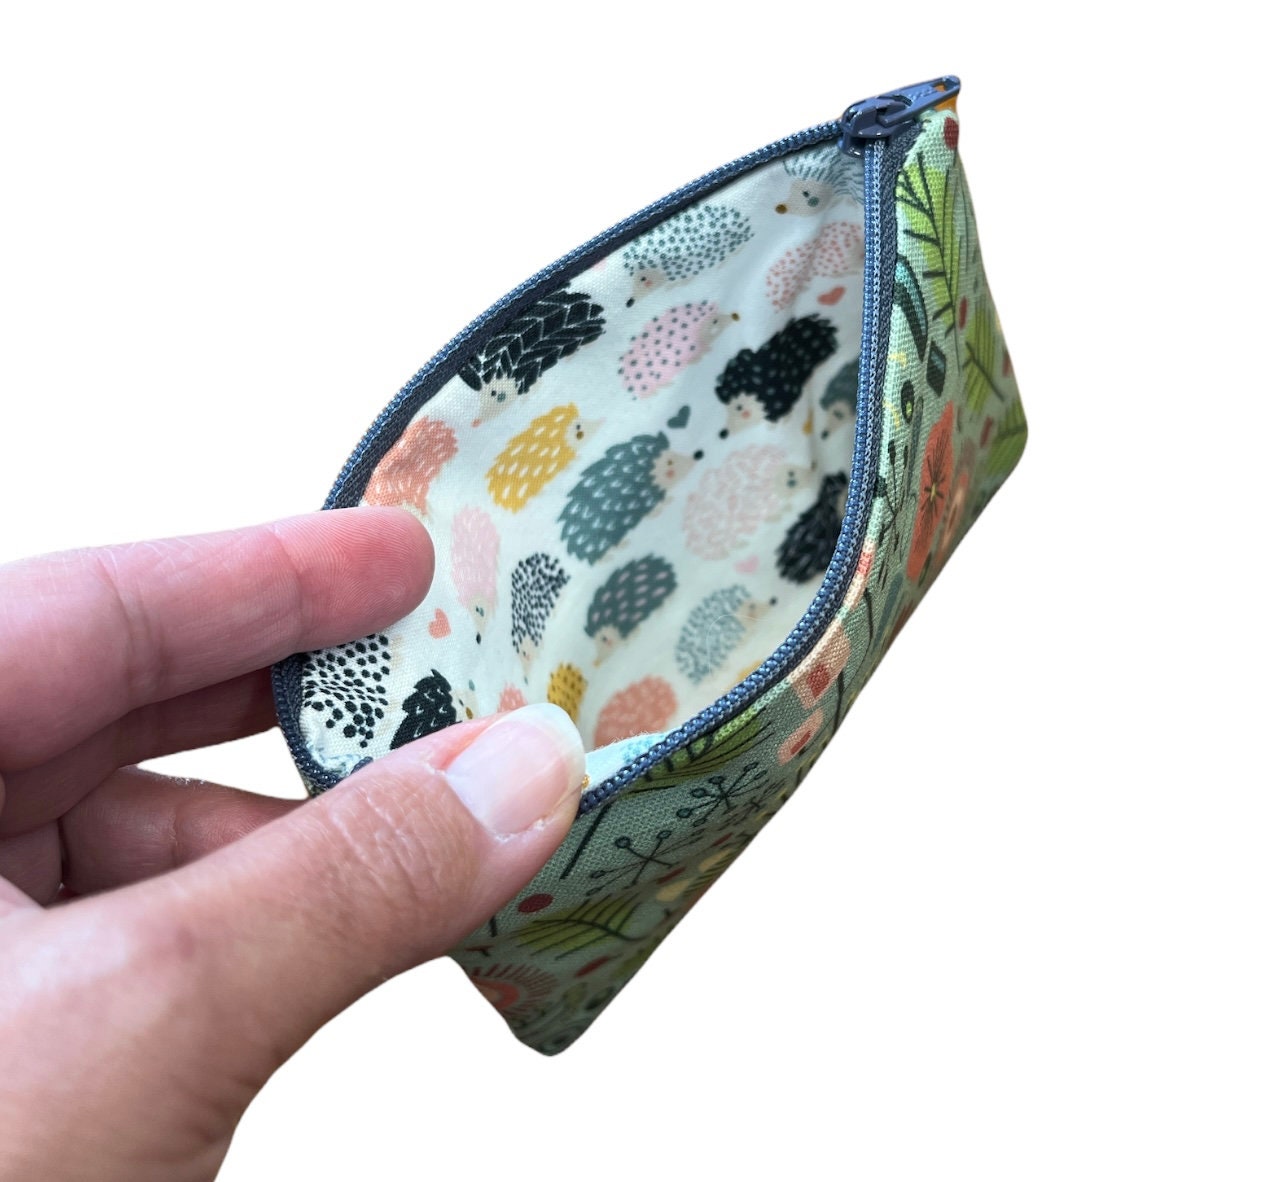 Flower coin purse, midcentury modern inspired pouch, 6"x4.5", linen and cotton, nylon zipper.